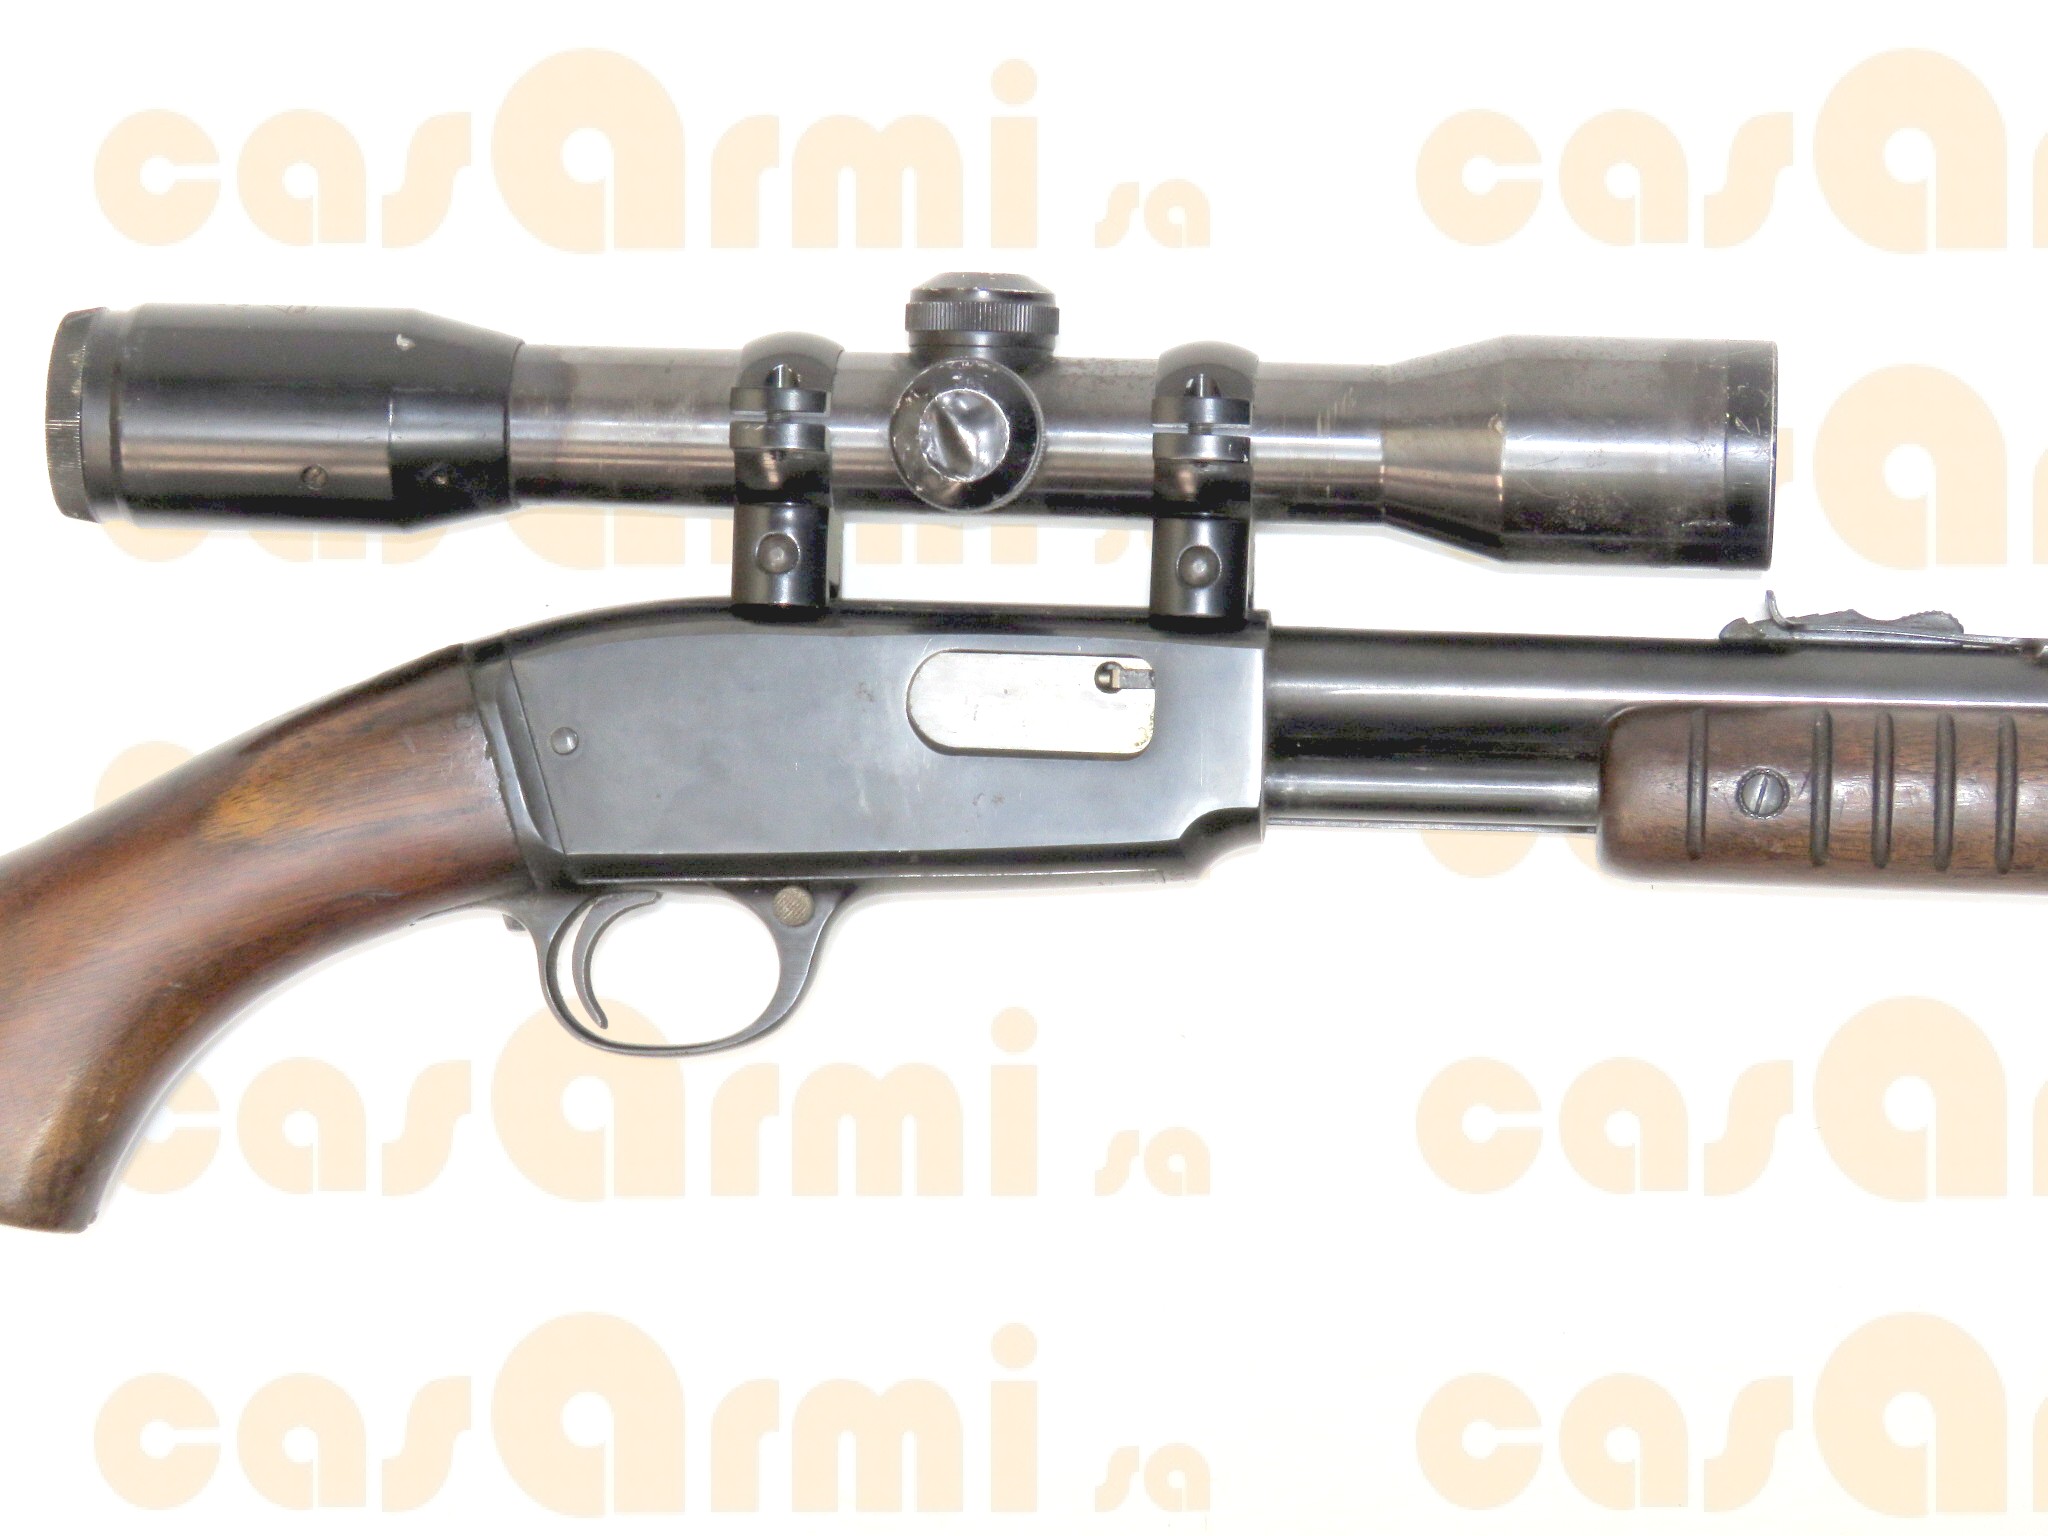 Winchester mod. 61 .22 long rifle